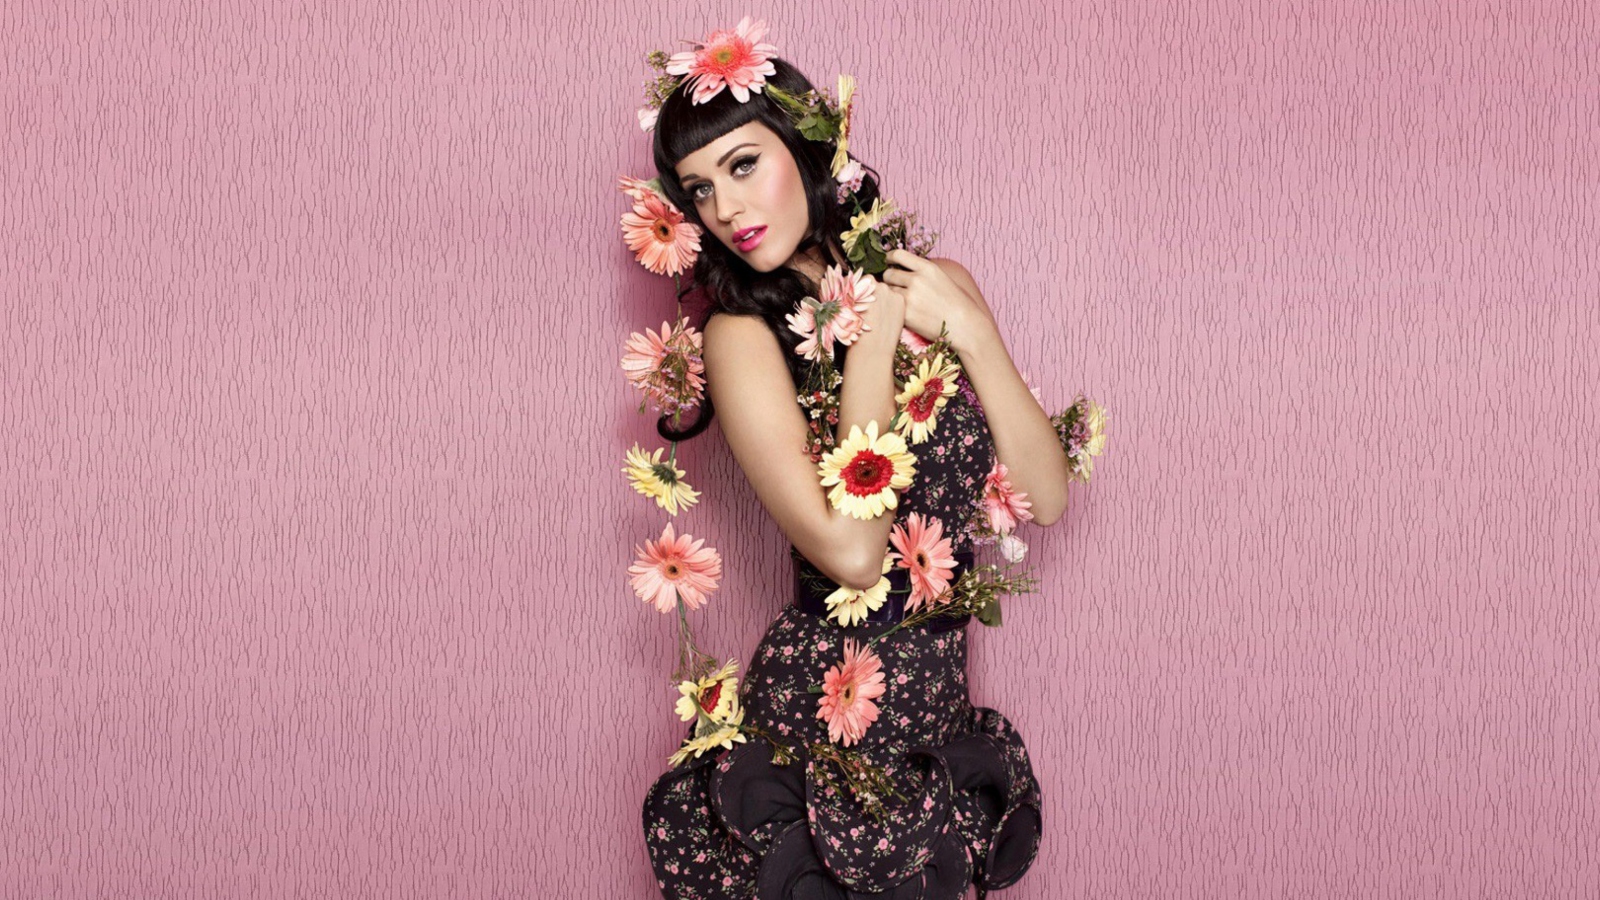 Katy Perry Wearing Flowered Dress wallpaper 1600x900